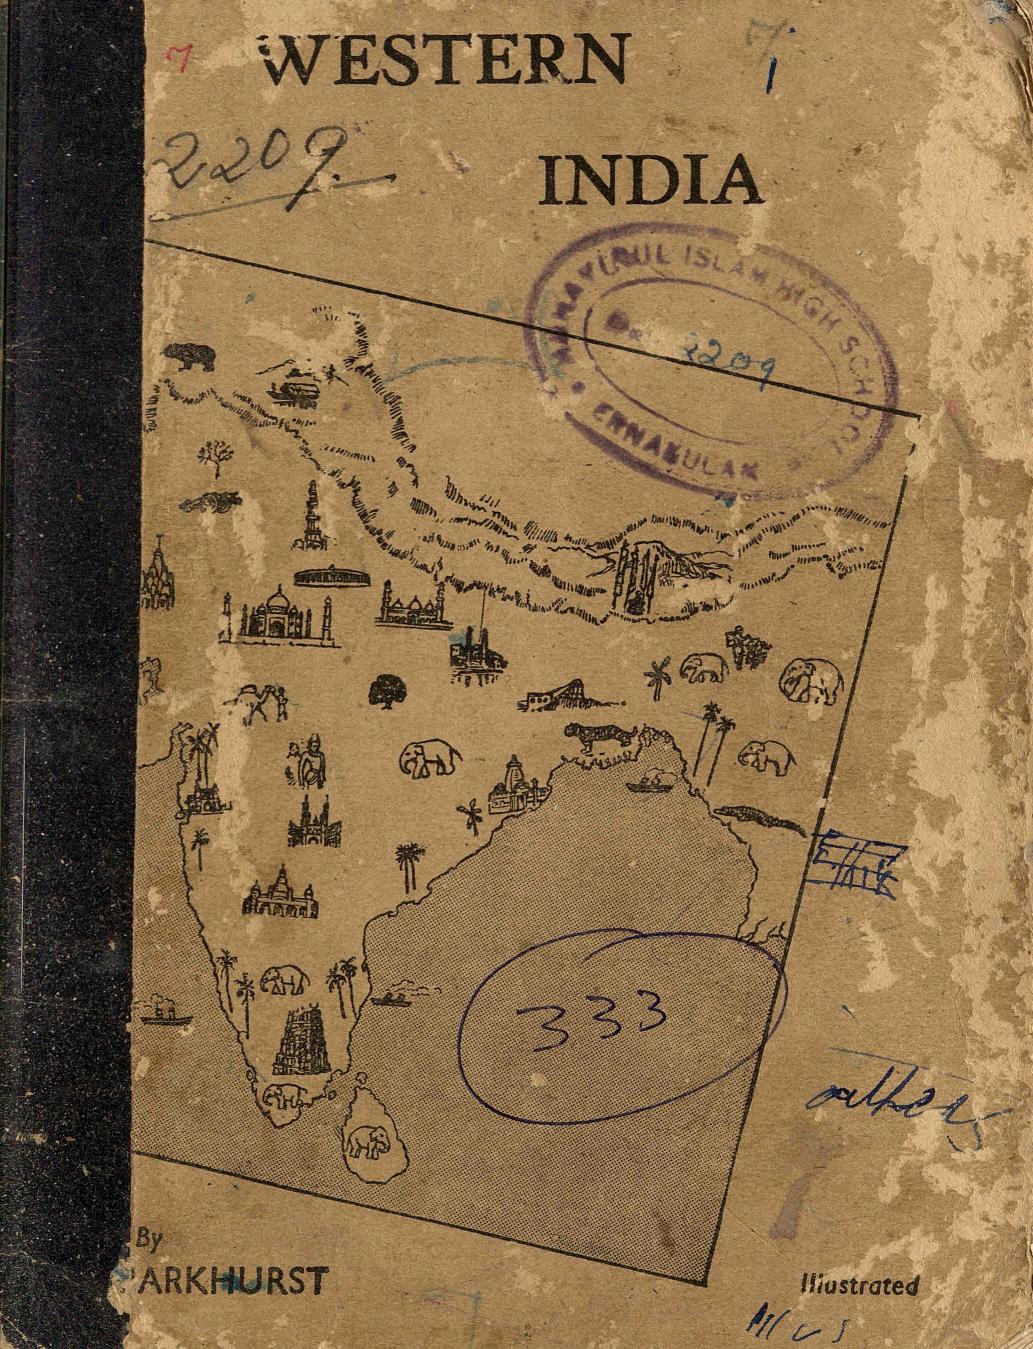 1947 - Western India - C. A. Parkhurst